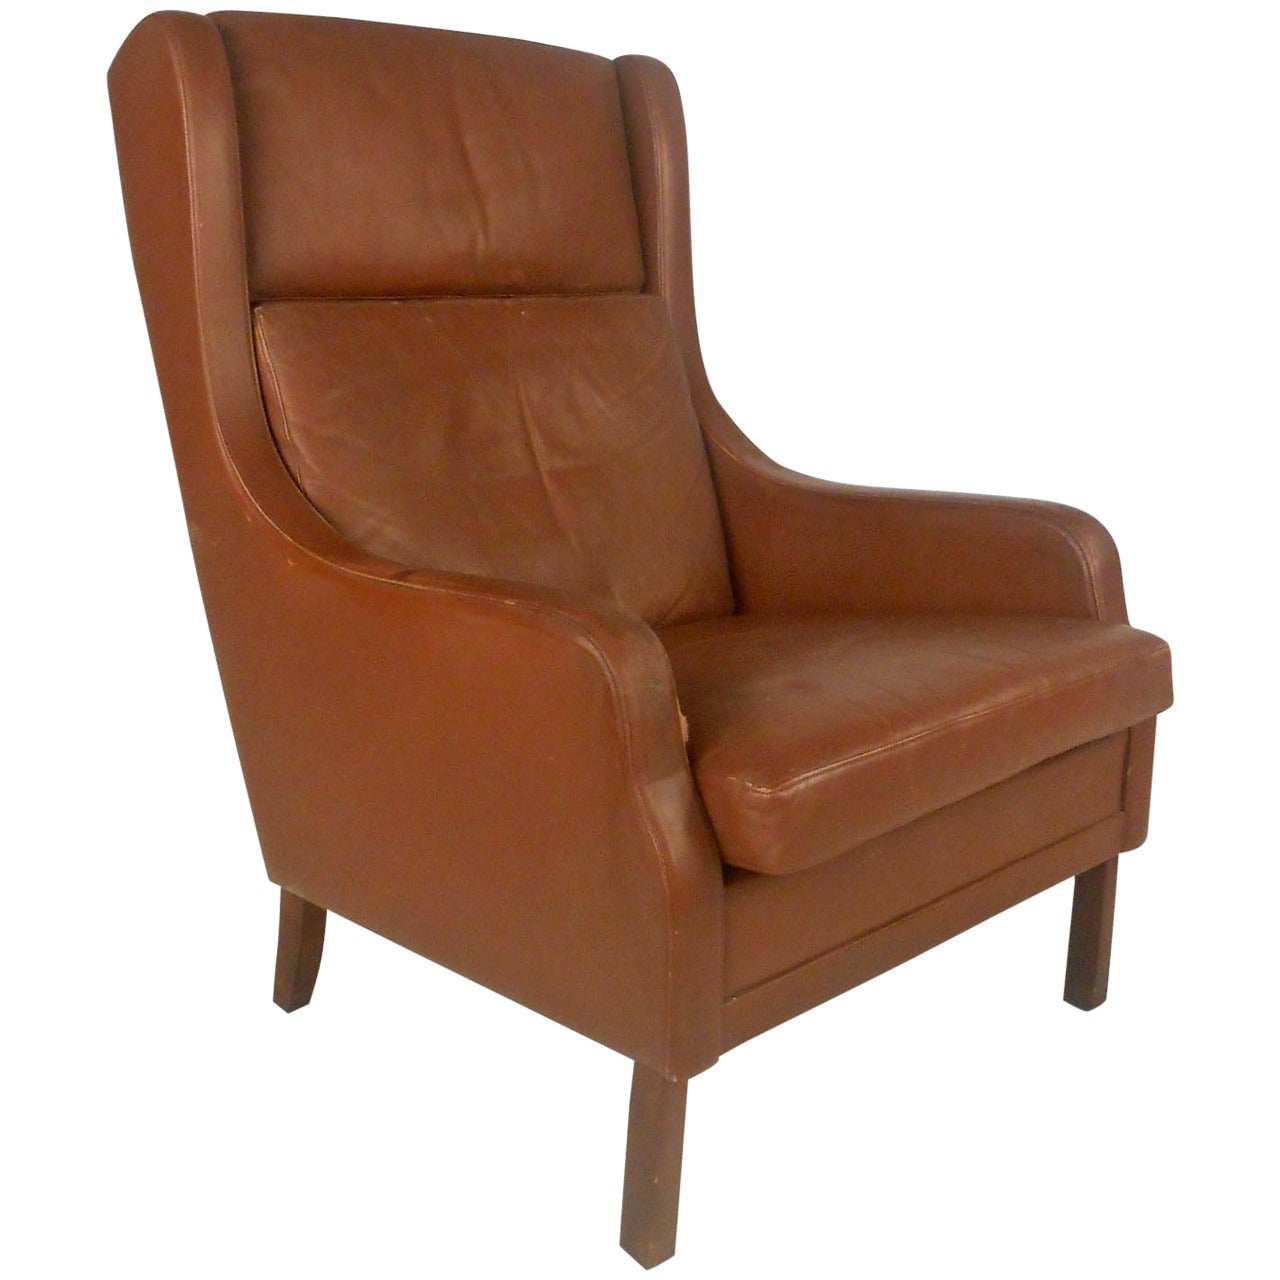 Unique Mid-Century Modern Vintage Leather Danish Lounge Chair